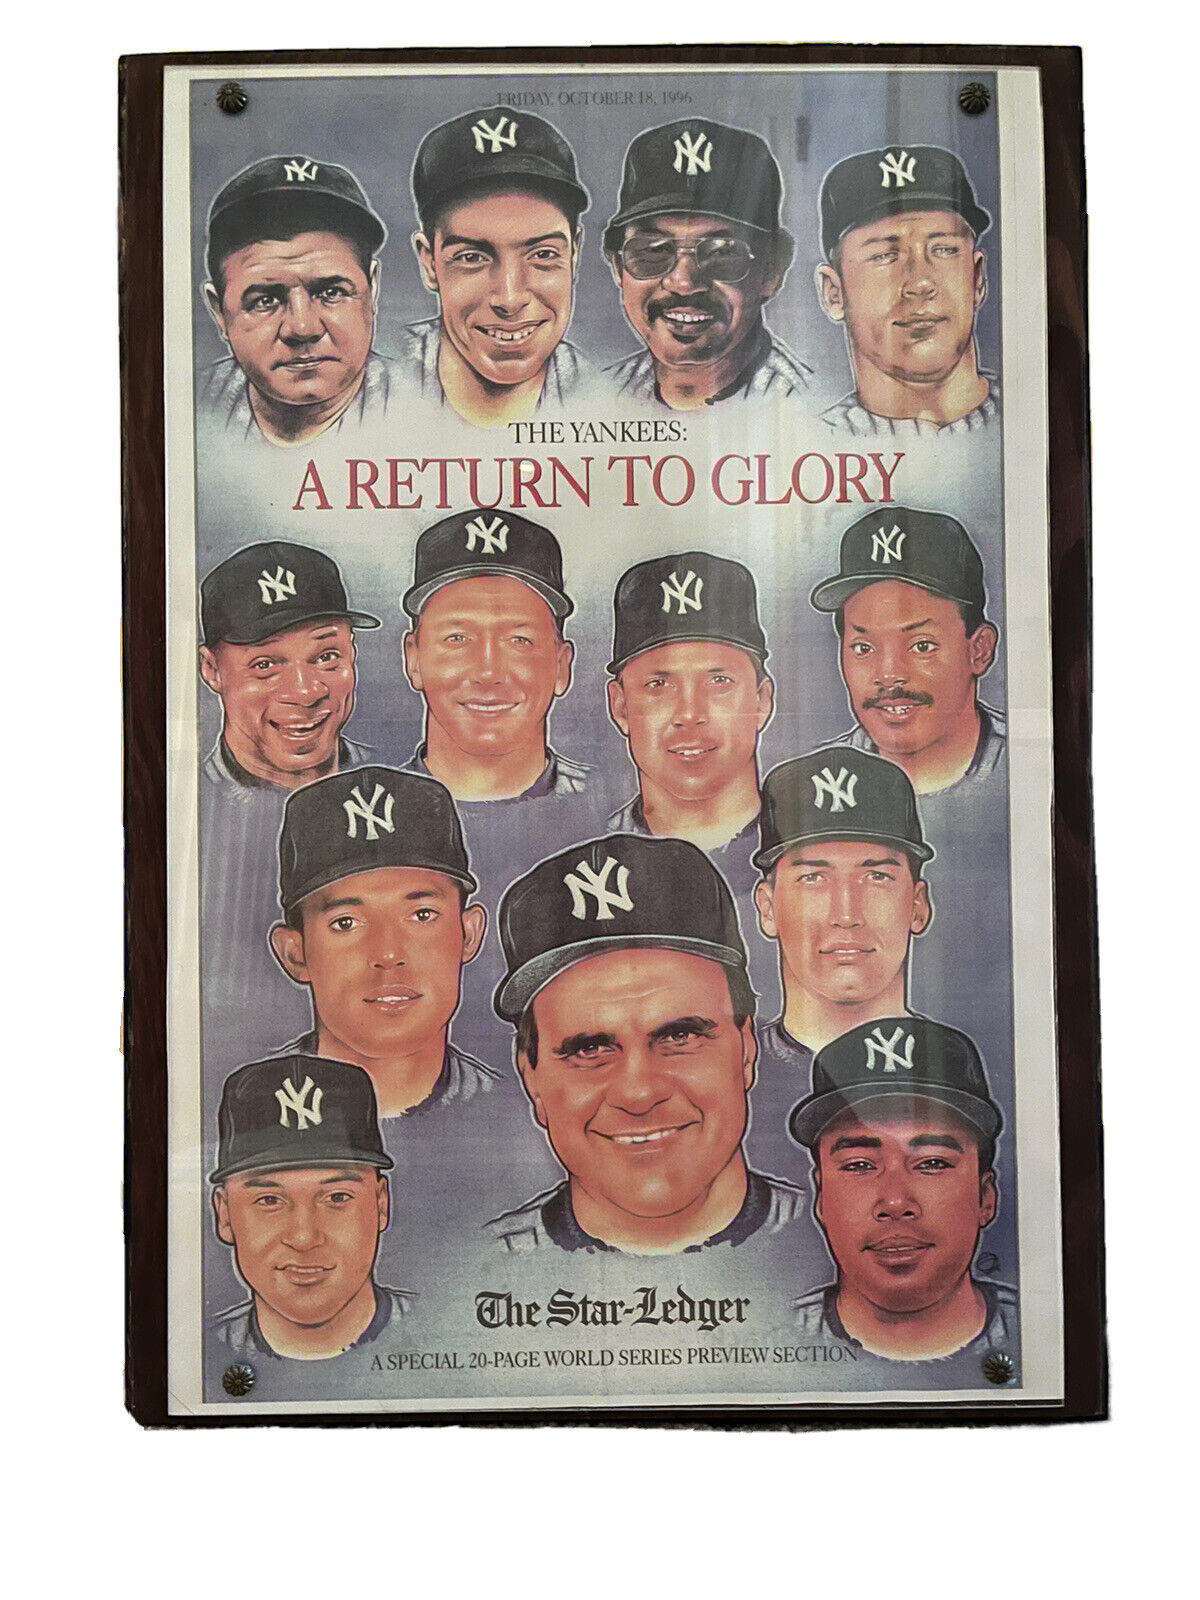 Rare 1996 Yankees A Return To Glory - Star Ledger Cover Art